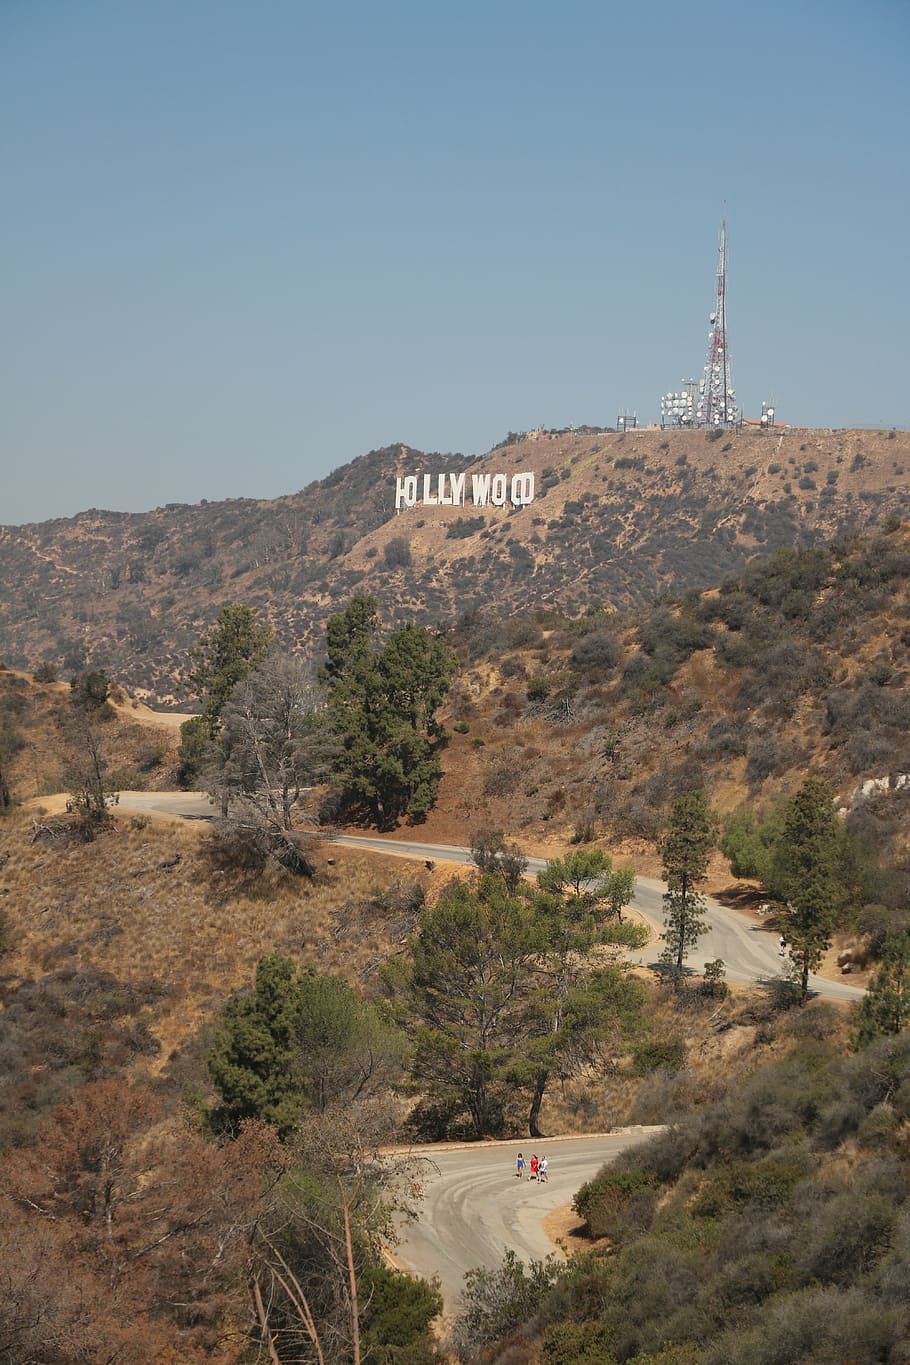 Hd Wallpaper Hollywood Hills California Usa Mountain Landmark